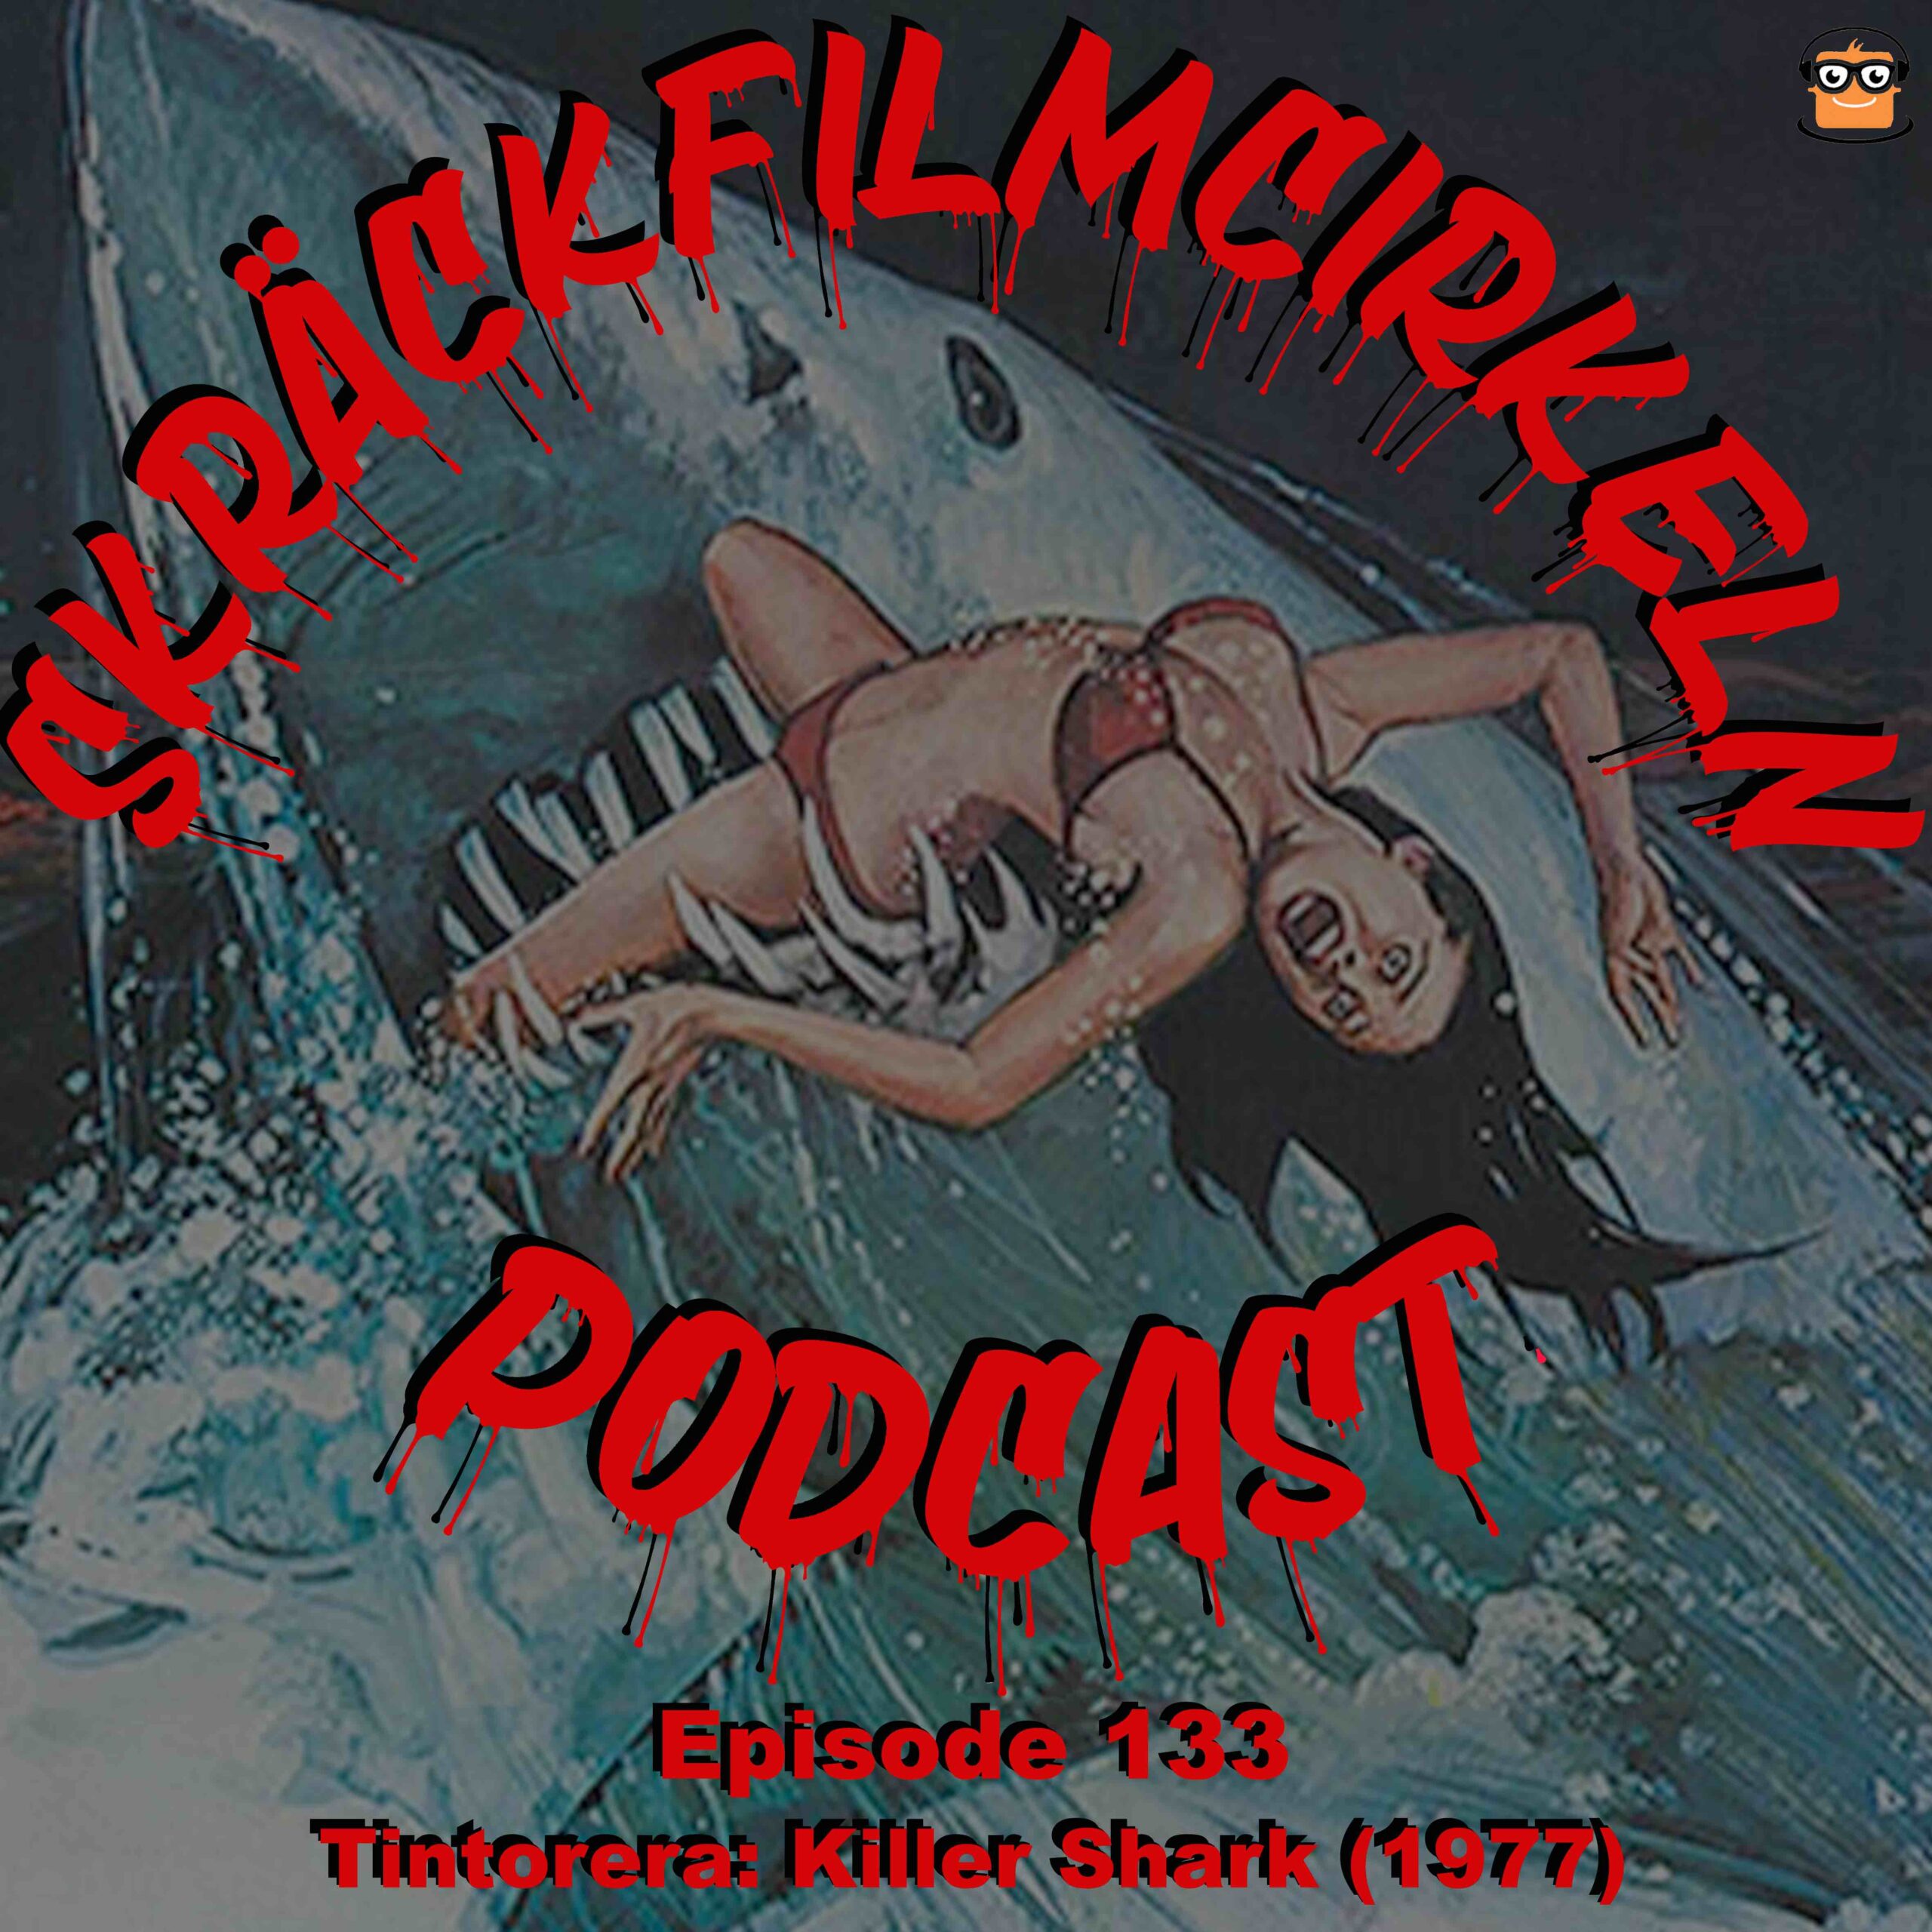 Episode 133 – Tintorera: Killer Shark (1977)